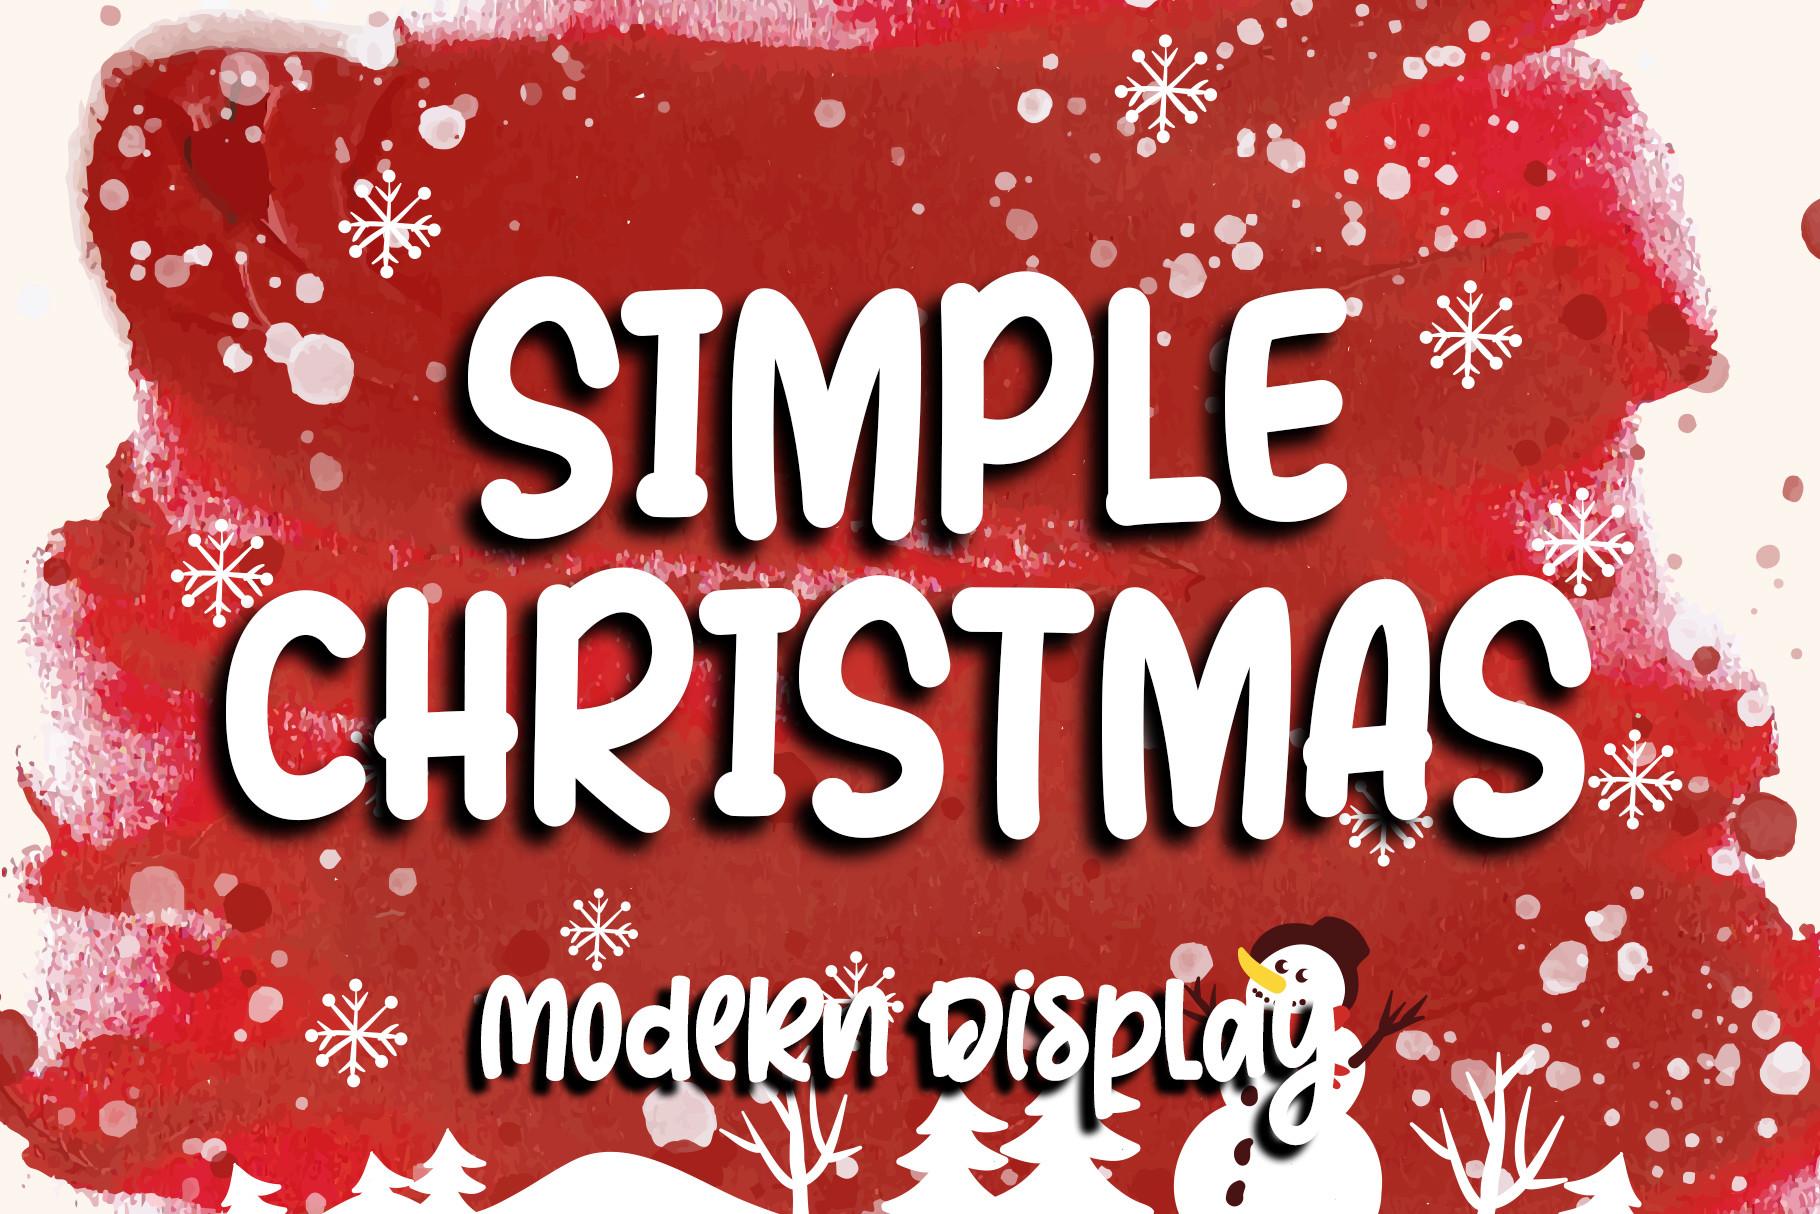 Simple Christmas Font